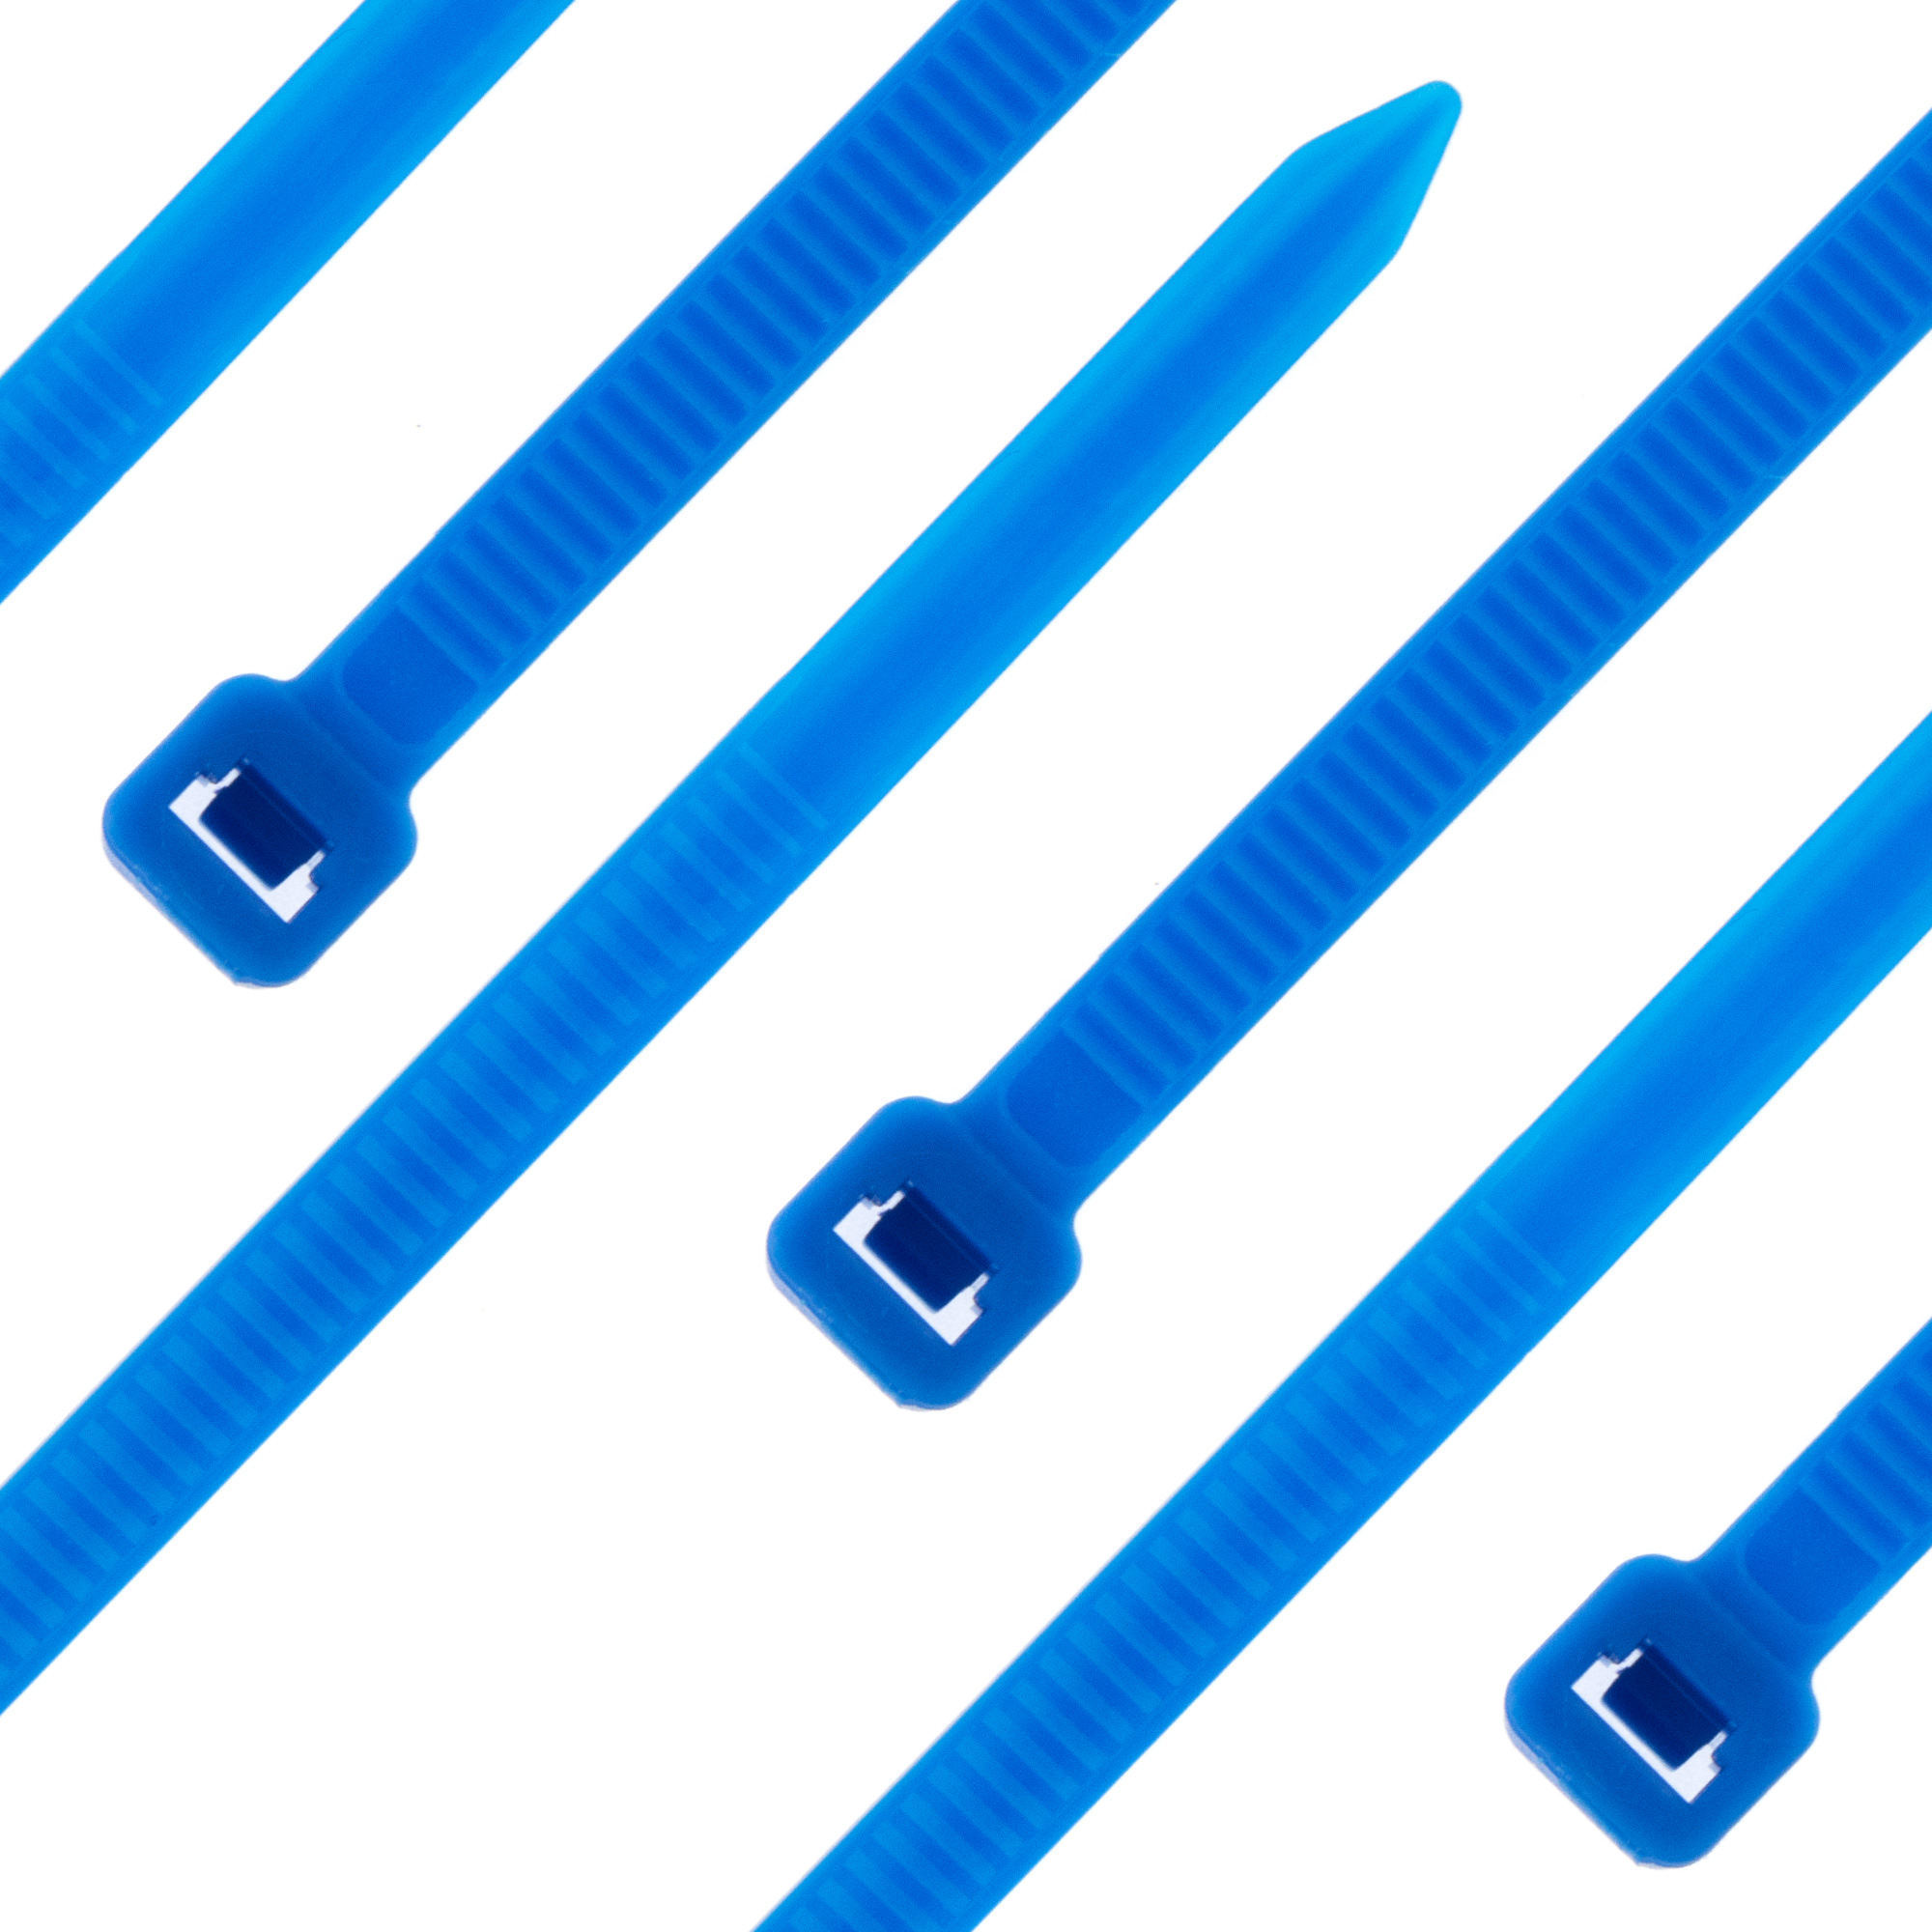 Cable tie self-locking 200 x 2,5mm, blue, 100PCS